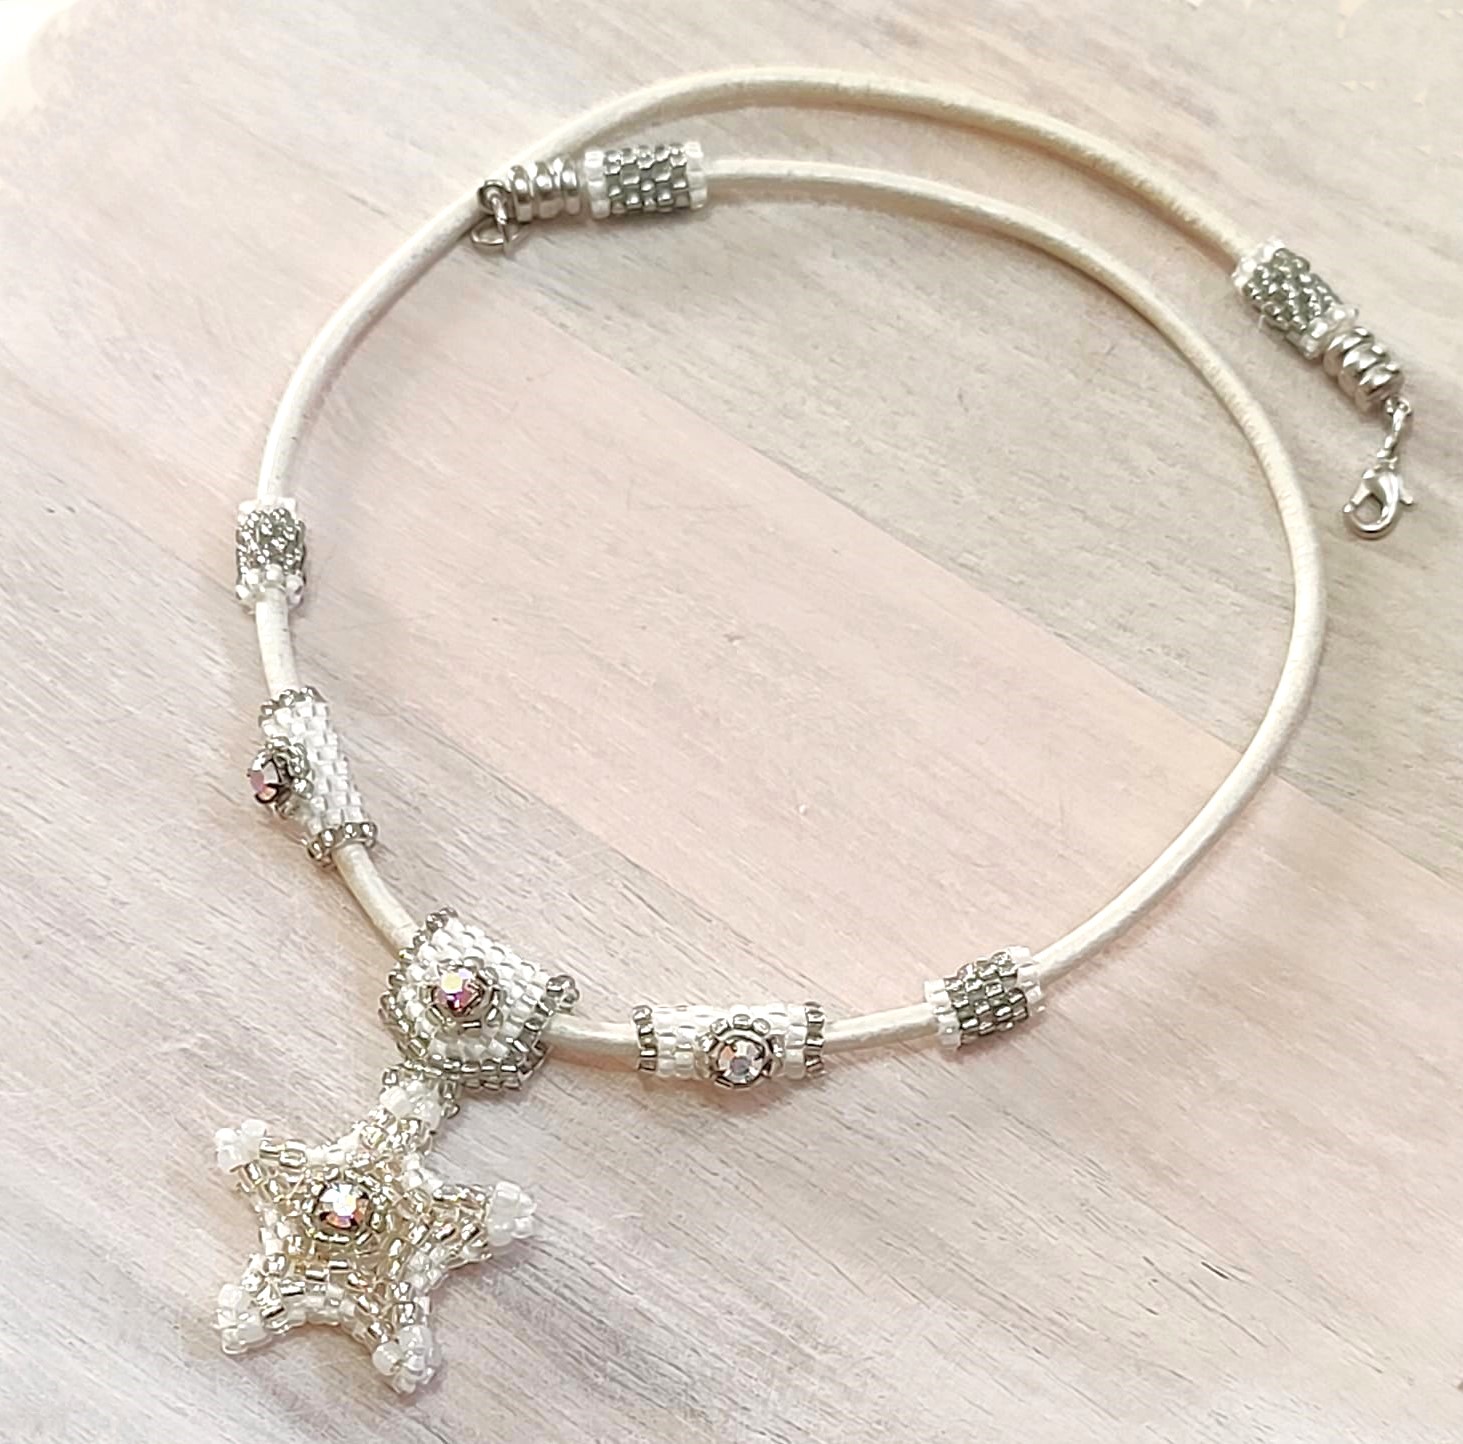 Starfish pendant necklace, w/auroa borealis crystal on leather